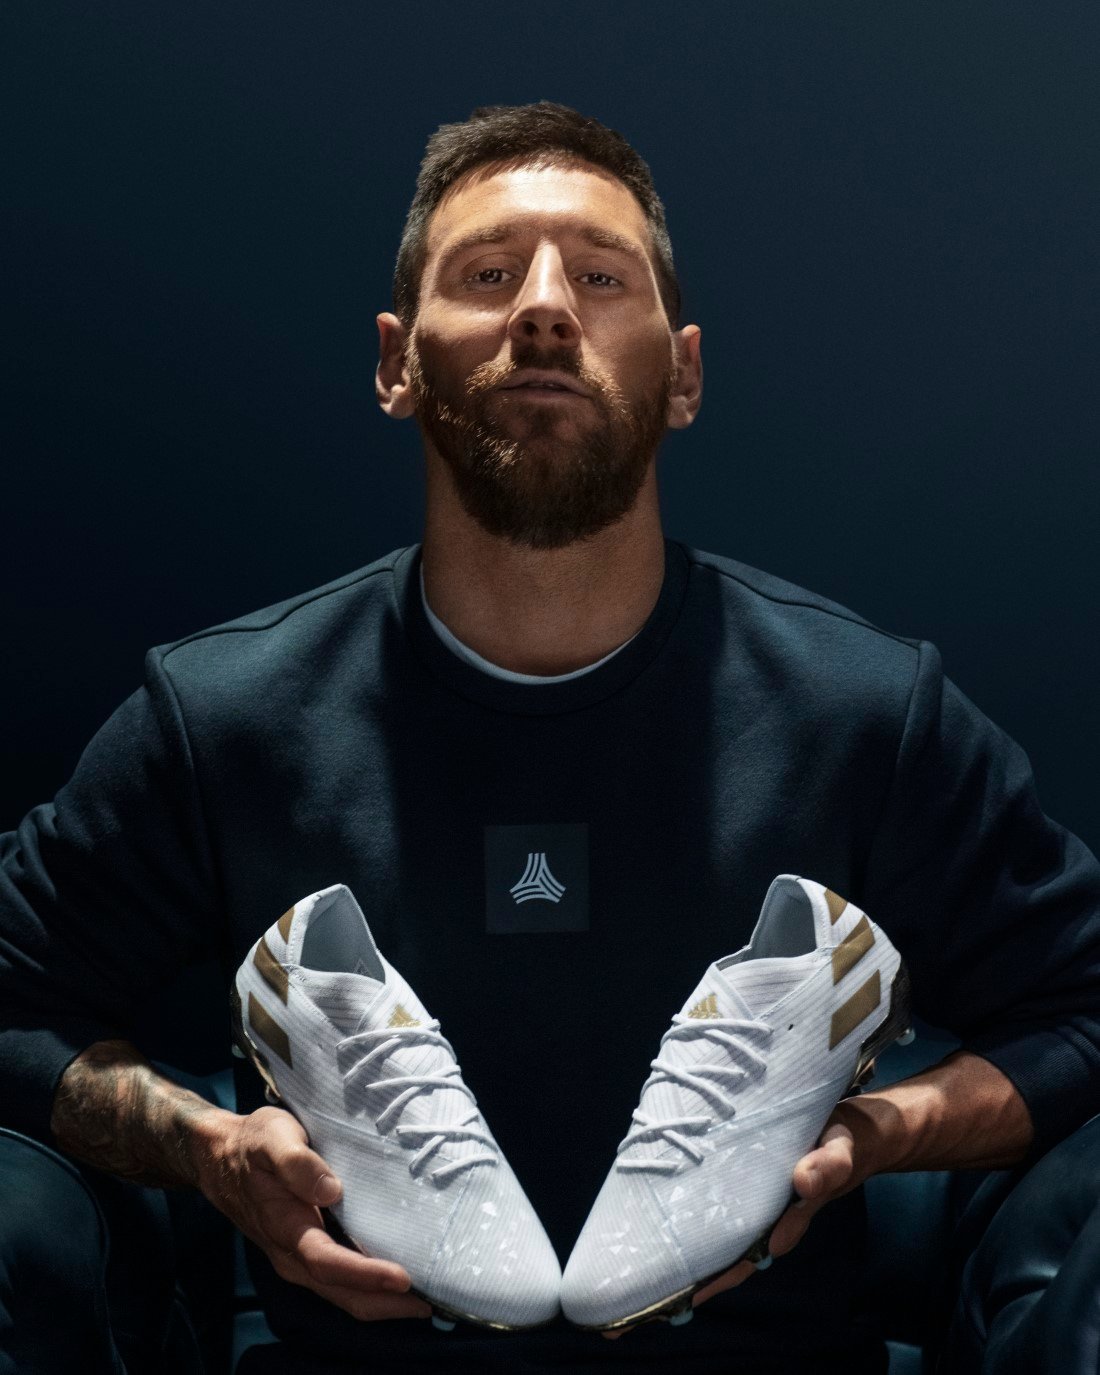 adidas - Lionel Messi NEMEZIZ MESSI 15 YEARS